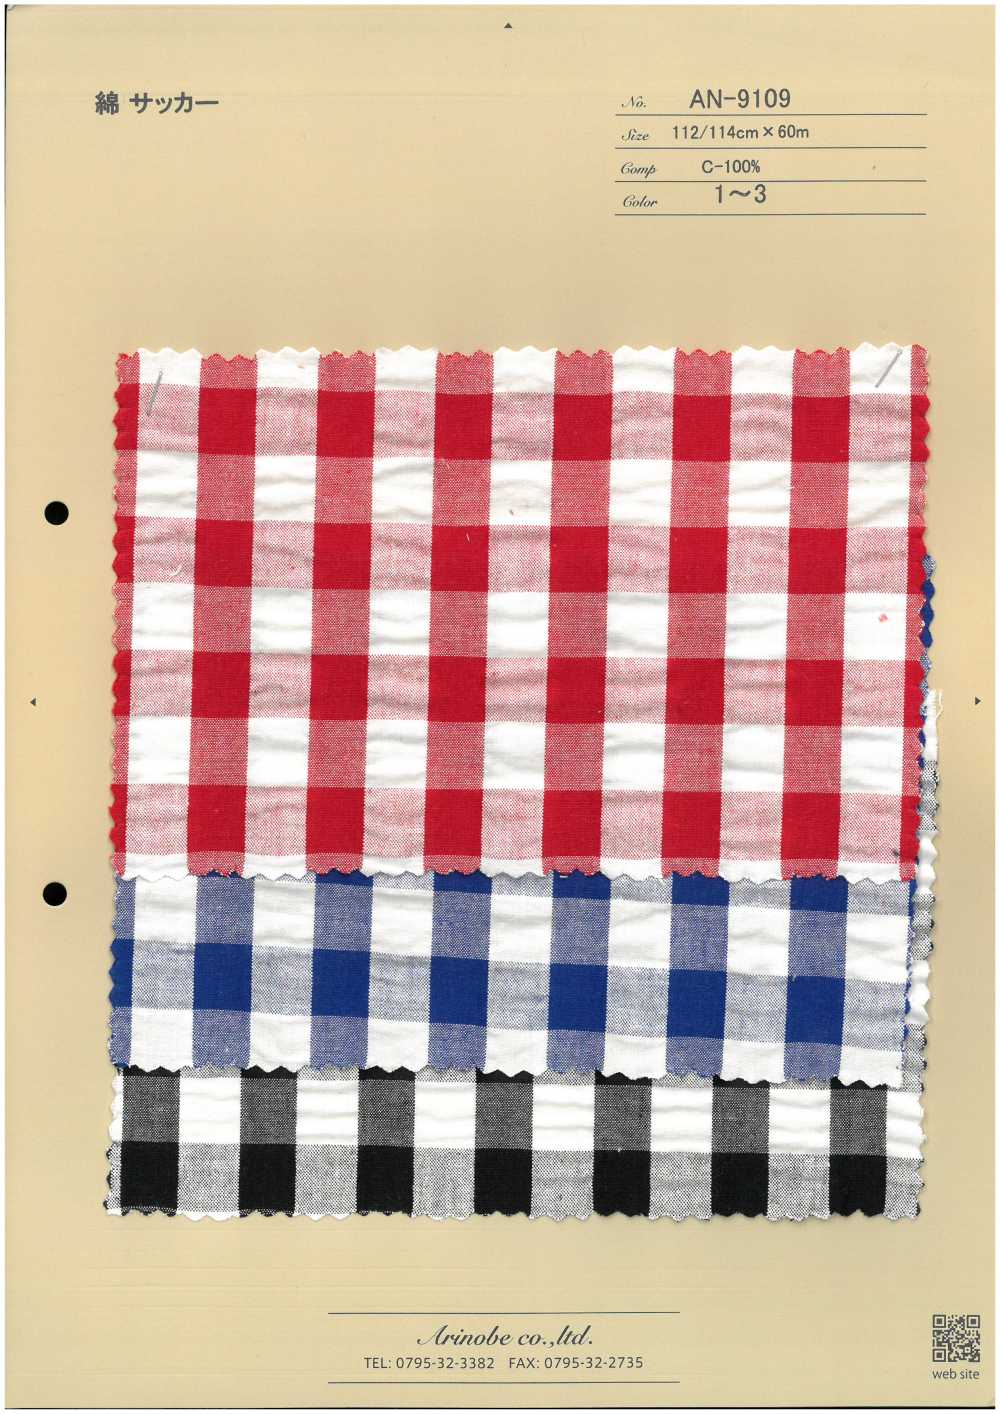 AN-9109 Baumwoll-Seersucker[Textilgewebe] ARINOBE CO., LTD.